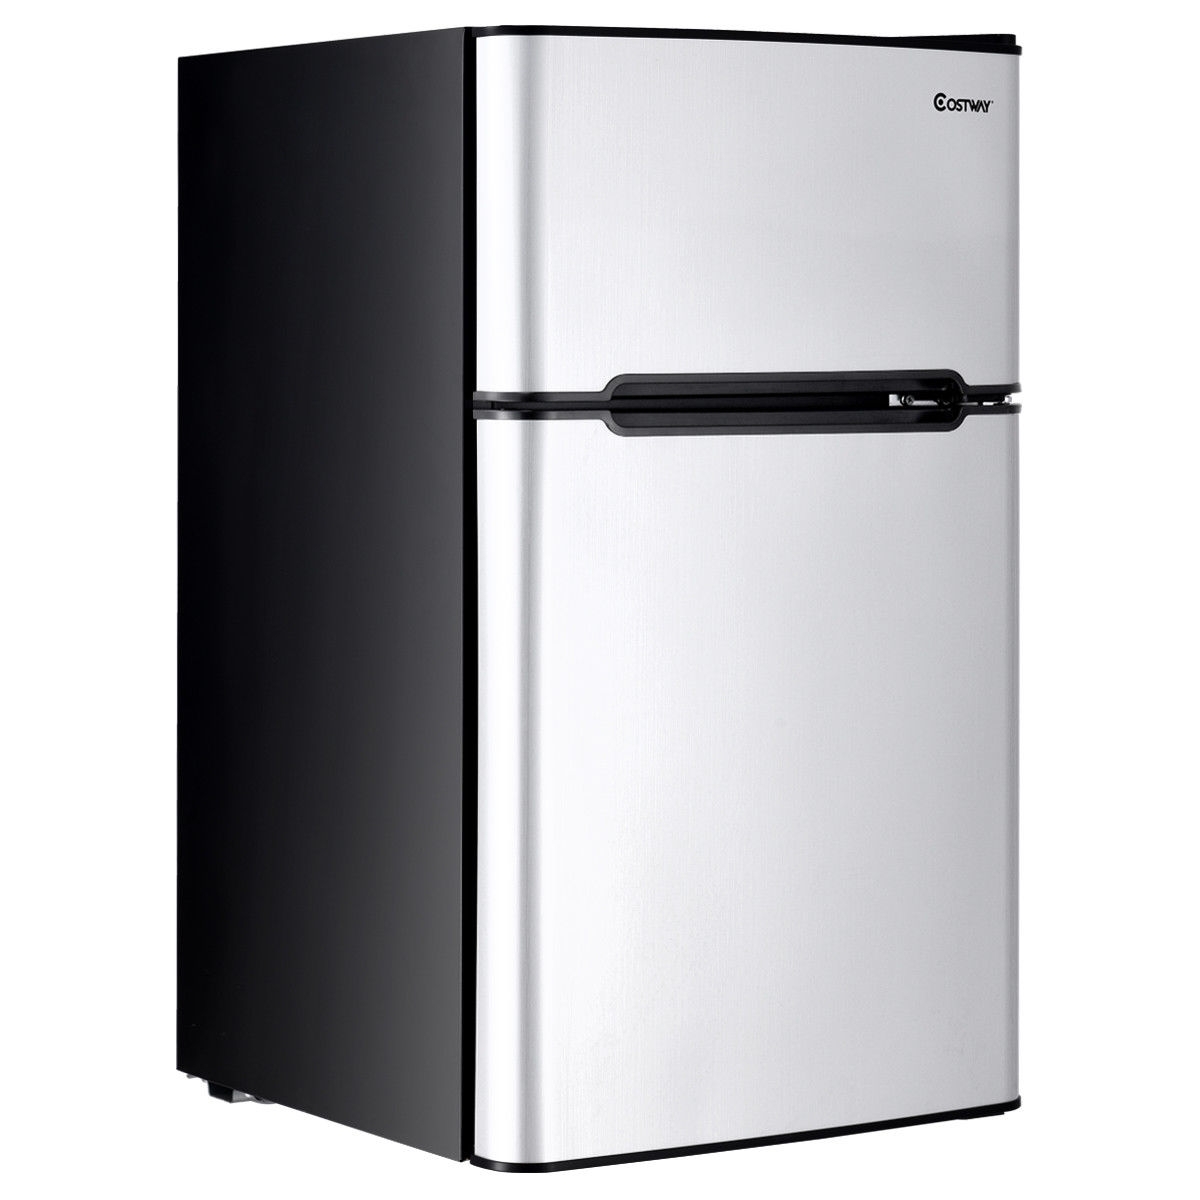 Appliances Kitchen Appliances Refrigerators & Freezers Refrigerators